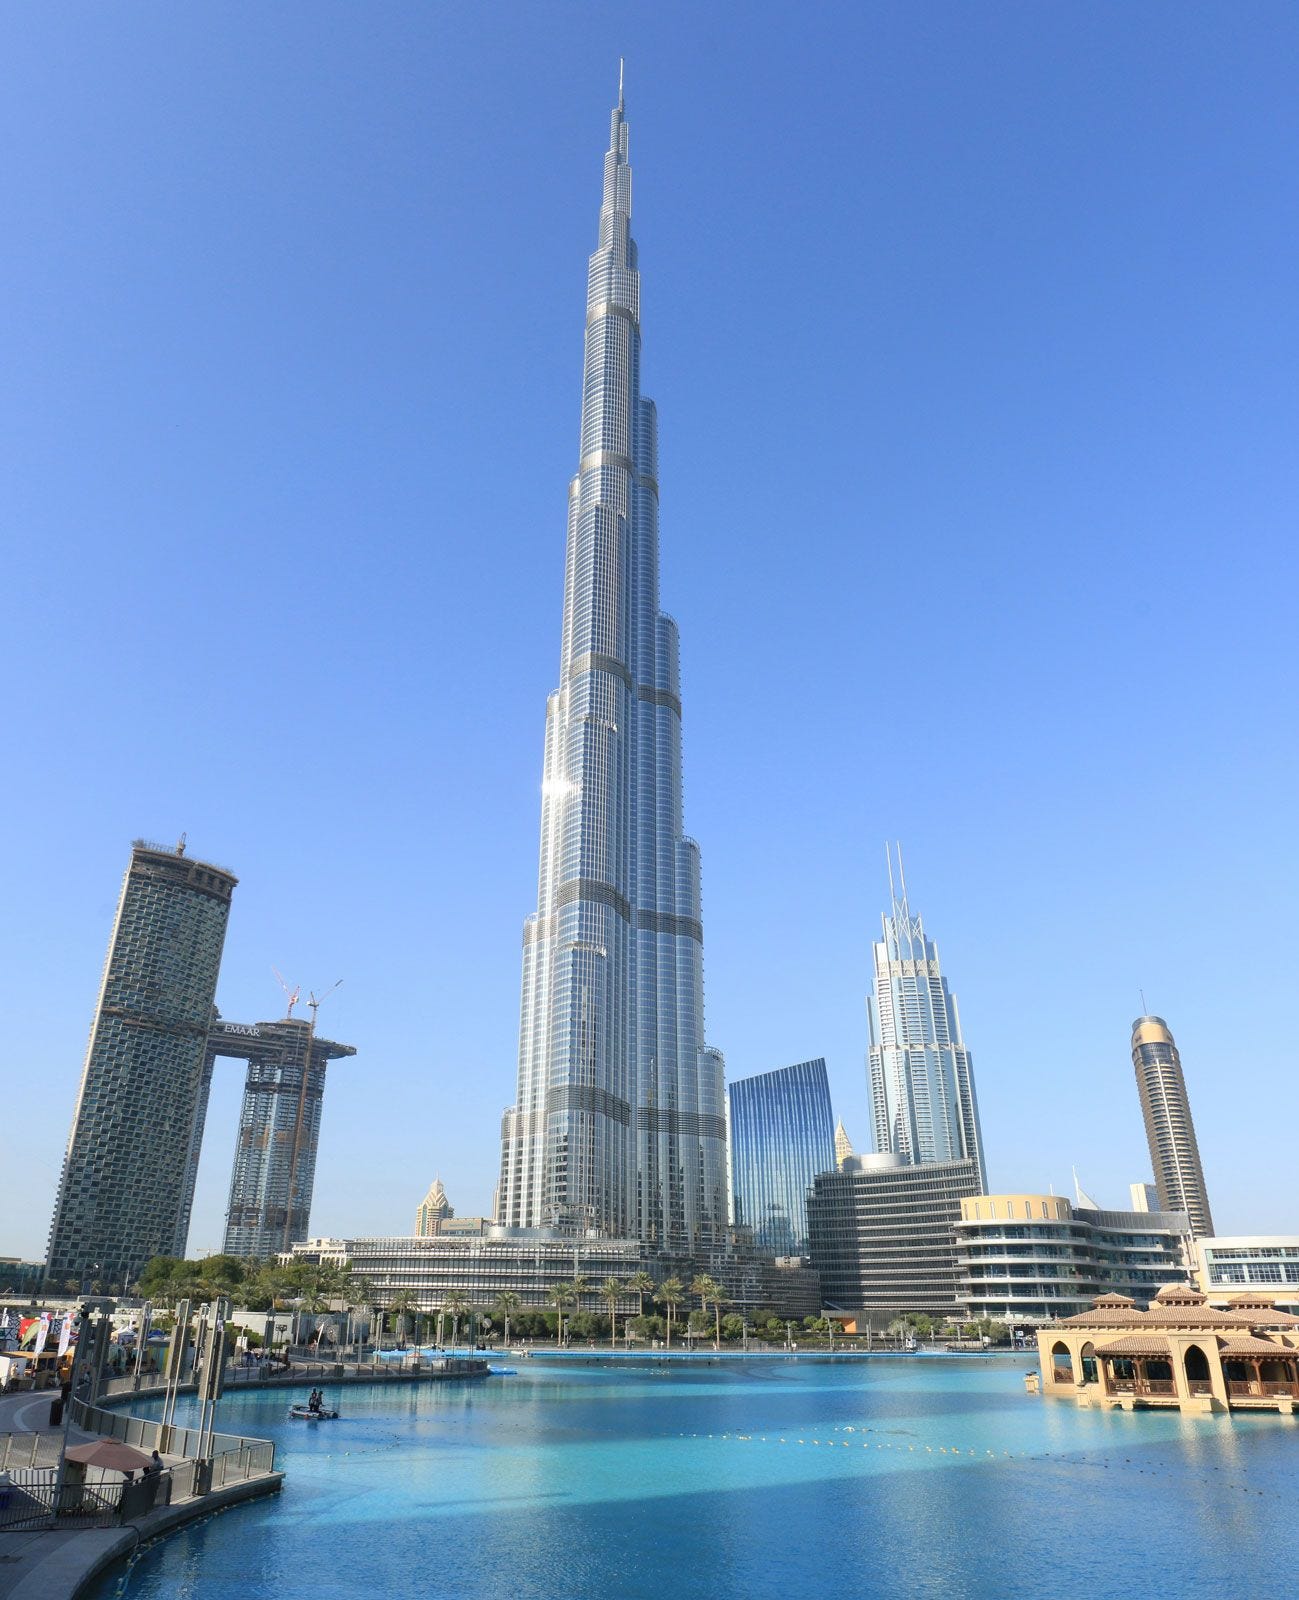 Who Owns the Burj Khalifa?